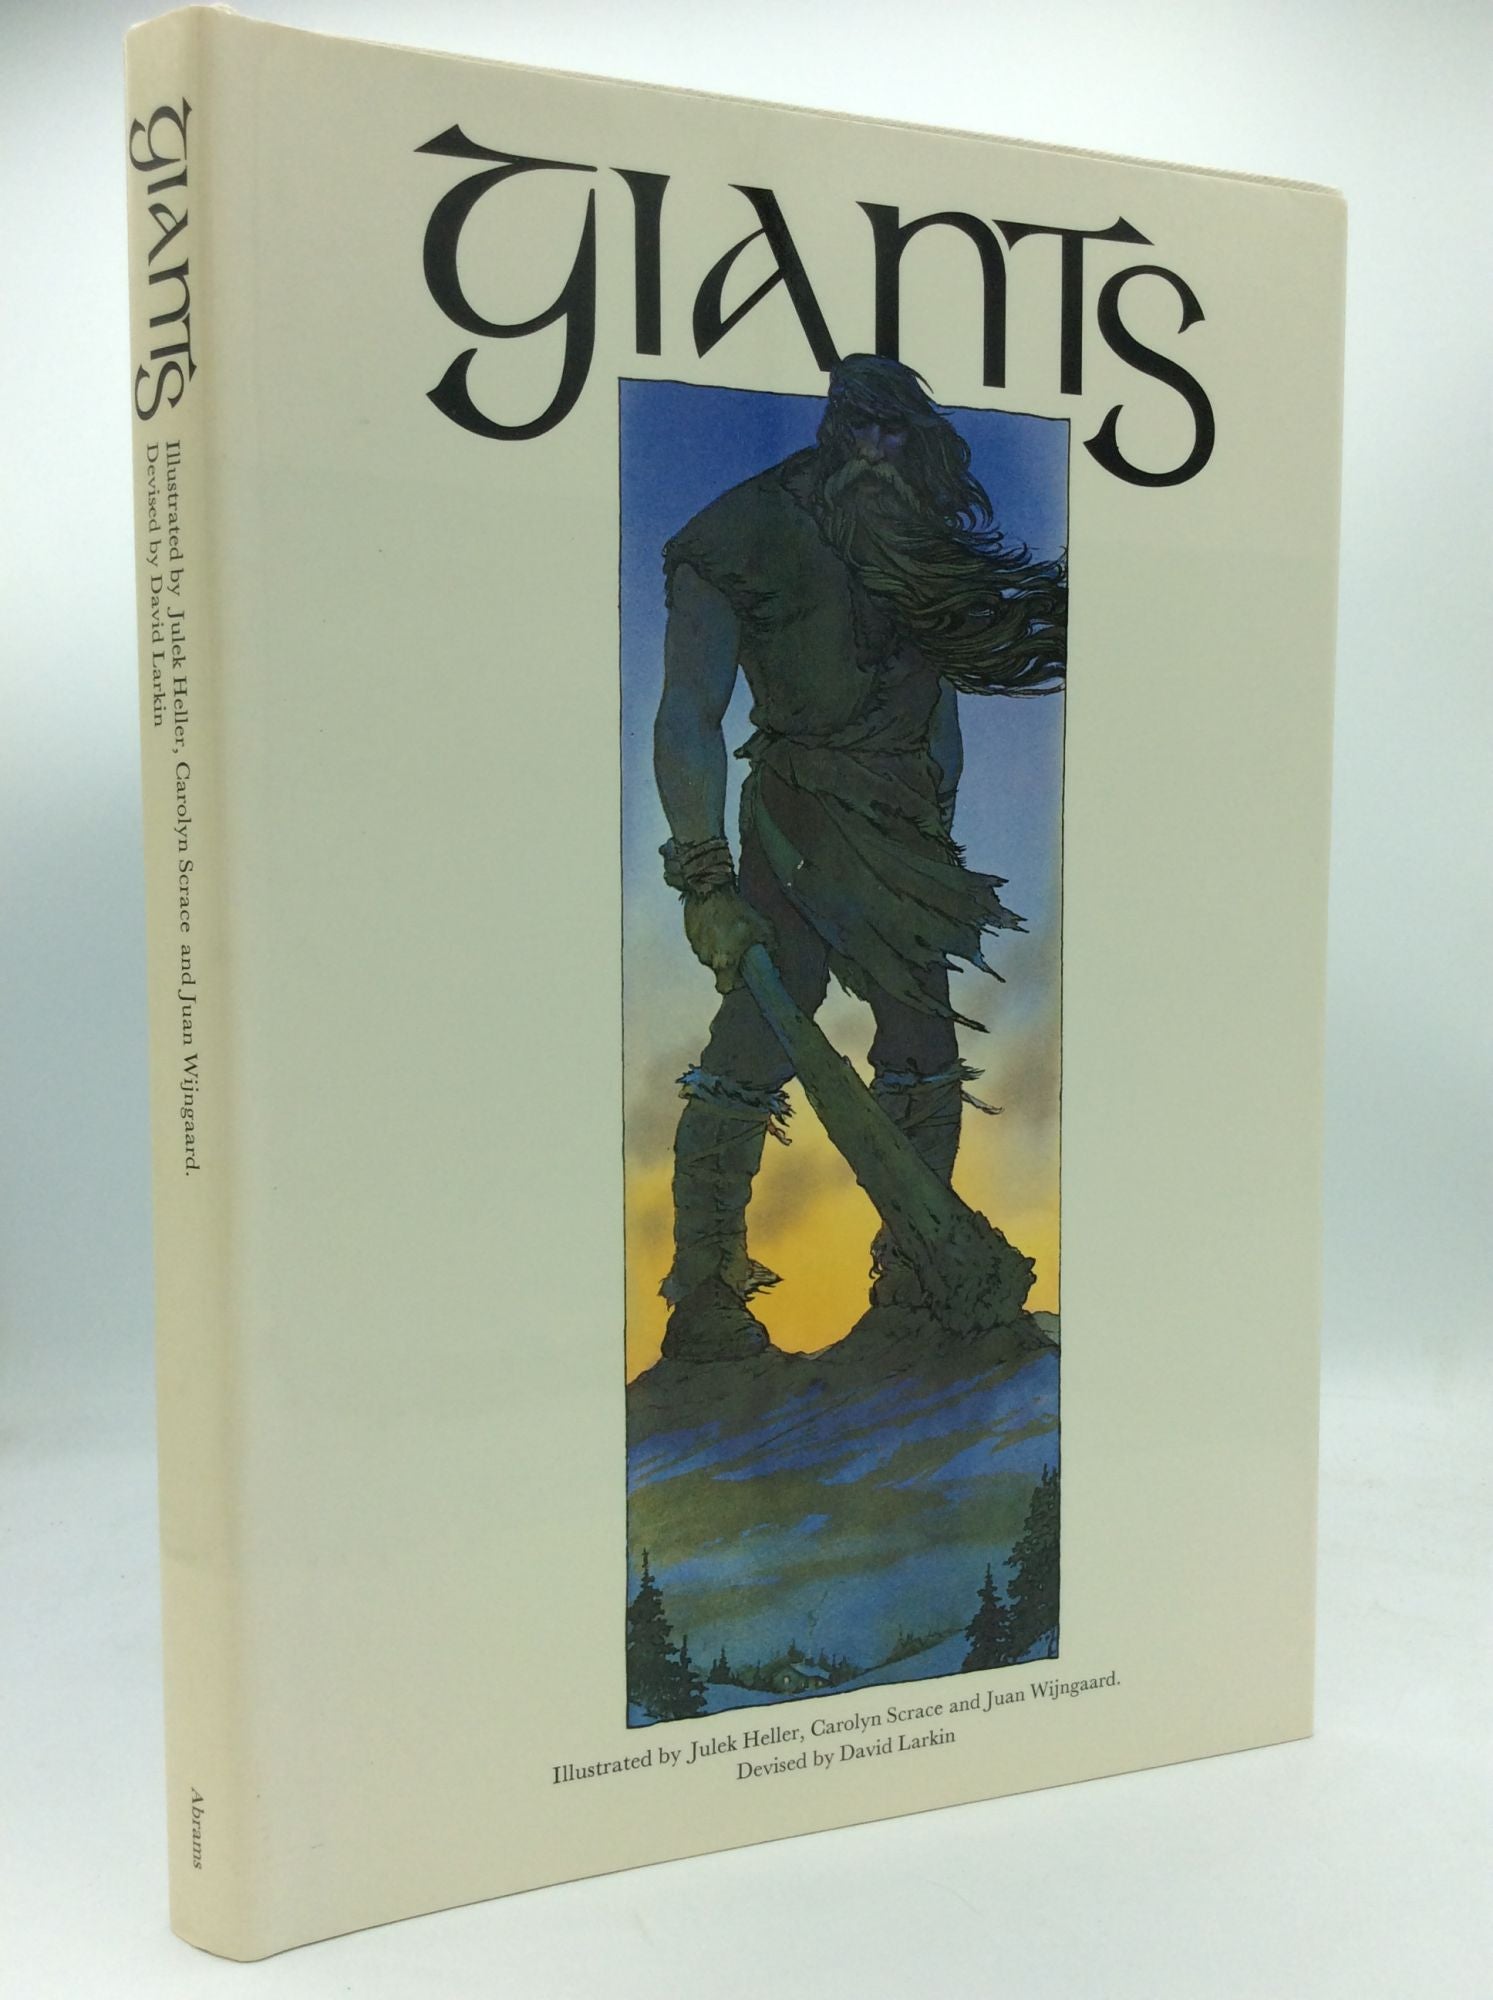 GIANTS by Sarah Teale, ed David Larkin on Kubik Fine Books Ltd